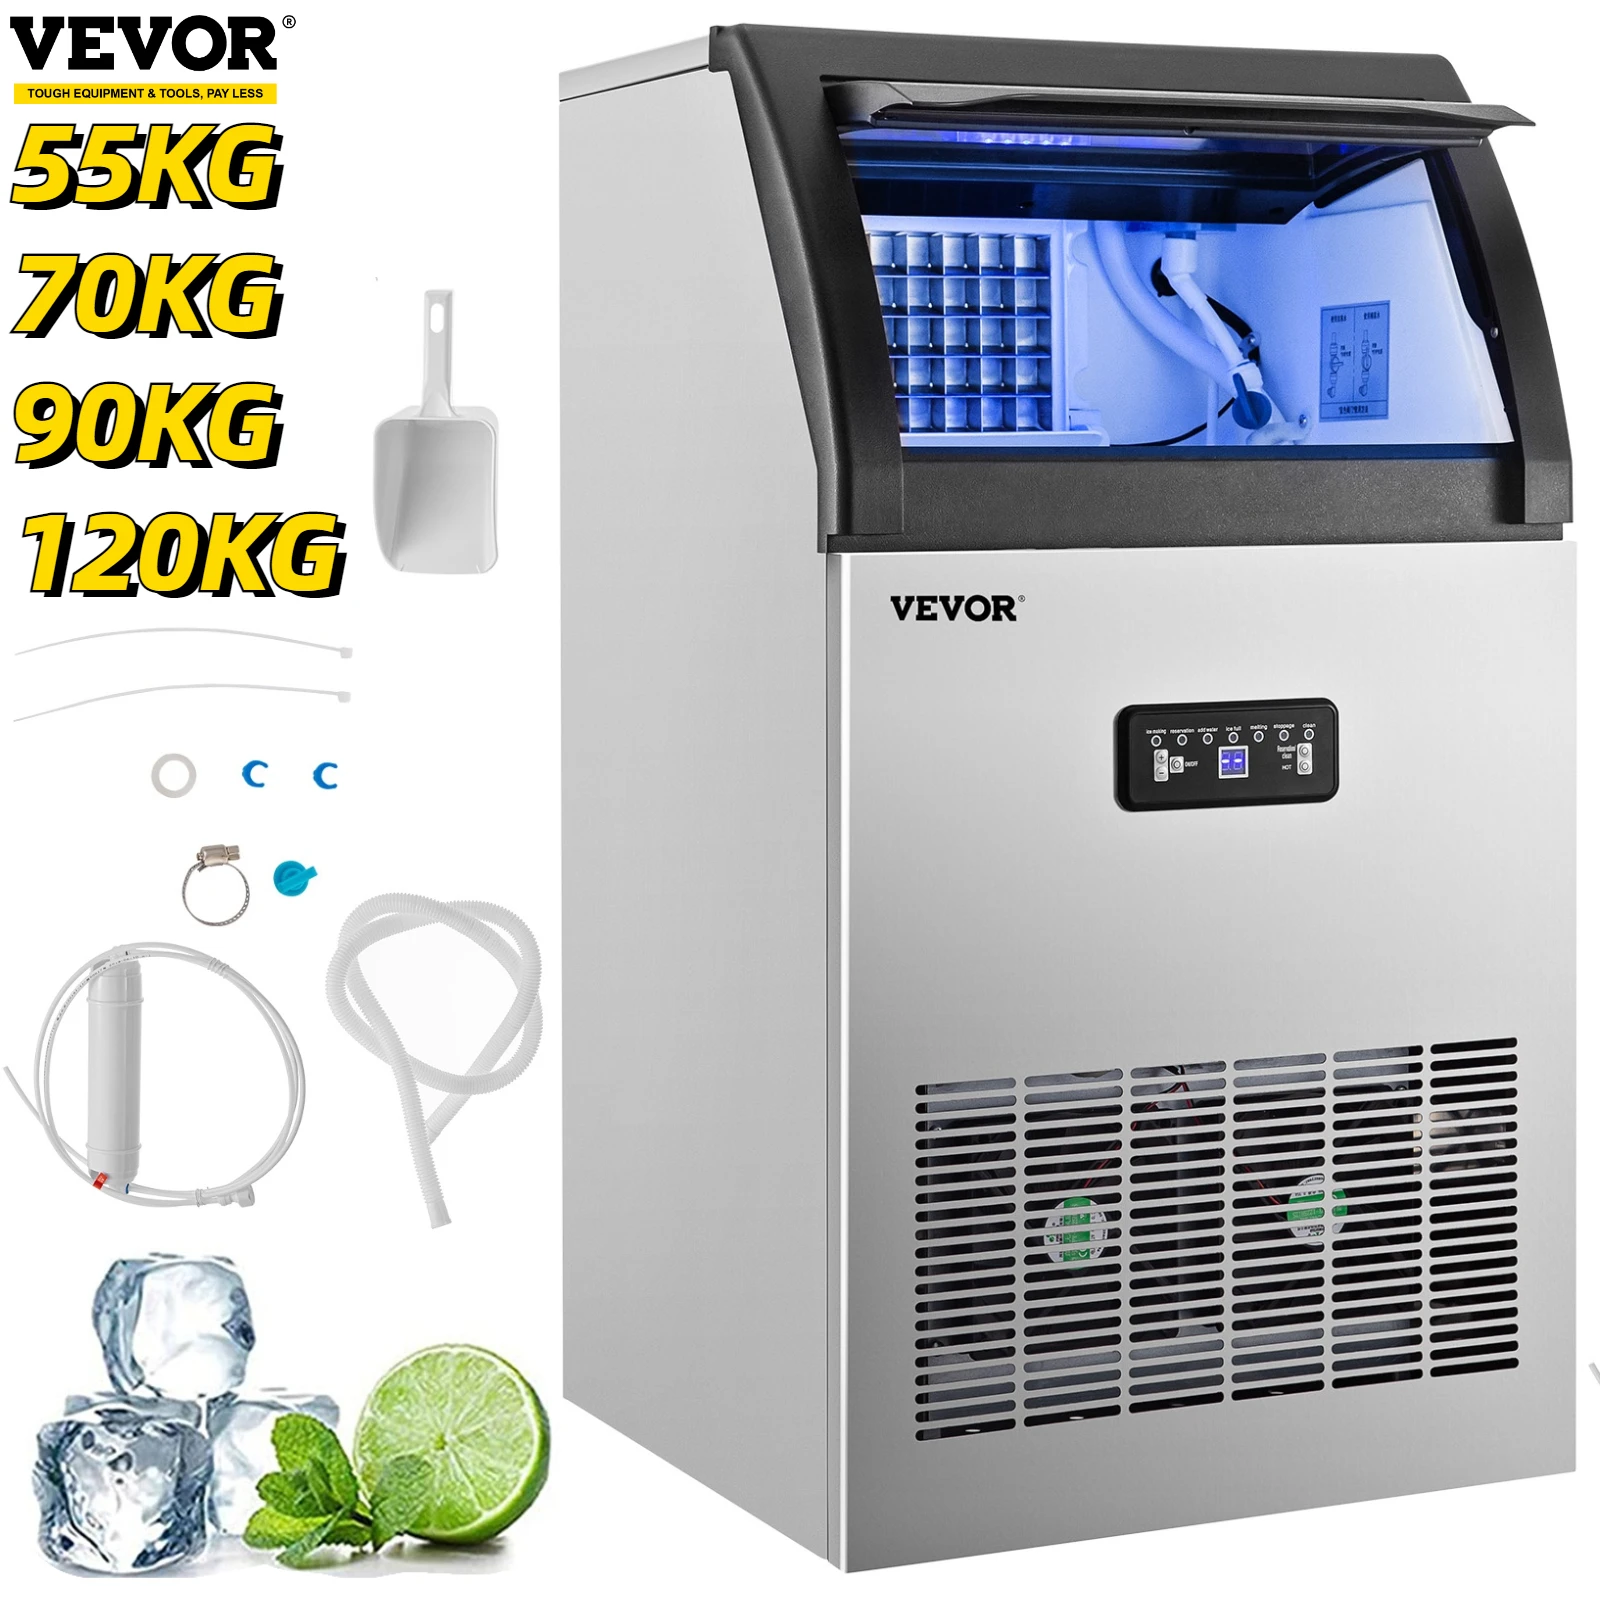 

VEVOR Commercial Cube Ice Maker 55/70/90/120 KG/24H Freestanding Automatic Liquid Freezer Ice Generator Machine Home Appliance